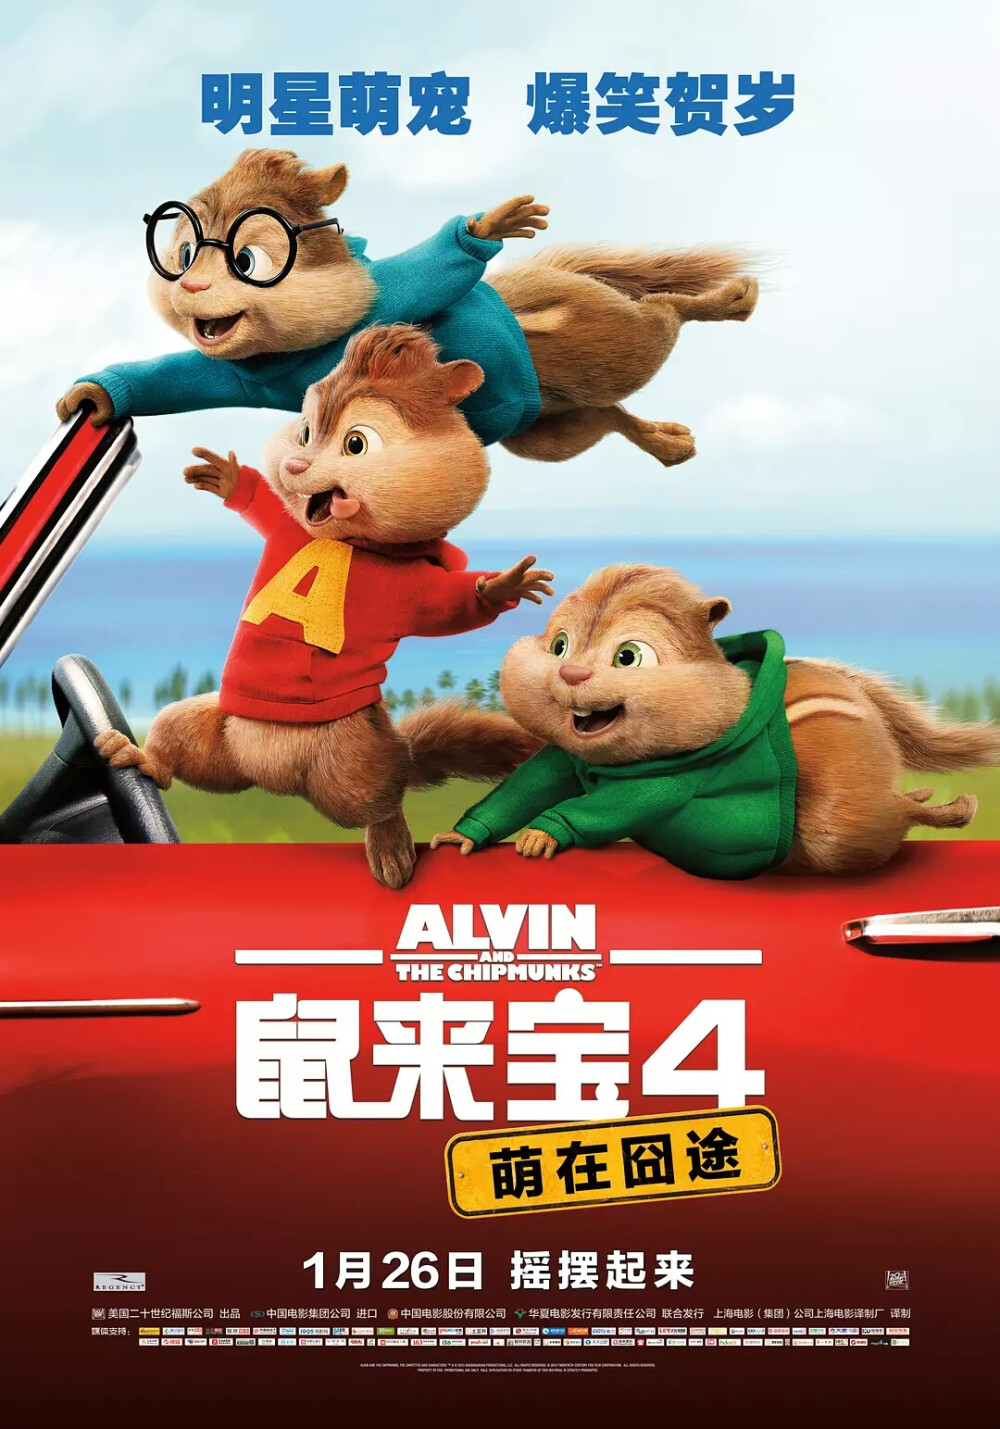 ★《Alvin and the Chipmunks: The Road Chip》
★​《鼠来宝4：萌在囧途》是由二十世纪福斯电影公司出品的真人动画片，由沃尔特·拜克执导，贾斯汀·朗、杰森·李、贝拉·索恩、马修·格雷·古柏勒领衔配音。
★该片讲述了艾文与花栗鼠们踏上前往纽约的公路之旅，旅行的目的则是阻止他们的主人大卫向女友求婚的故事。
★影片于2015年12月18日在美国上映，并于2016年1月26日在中国大陆上映 。